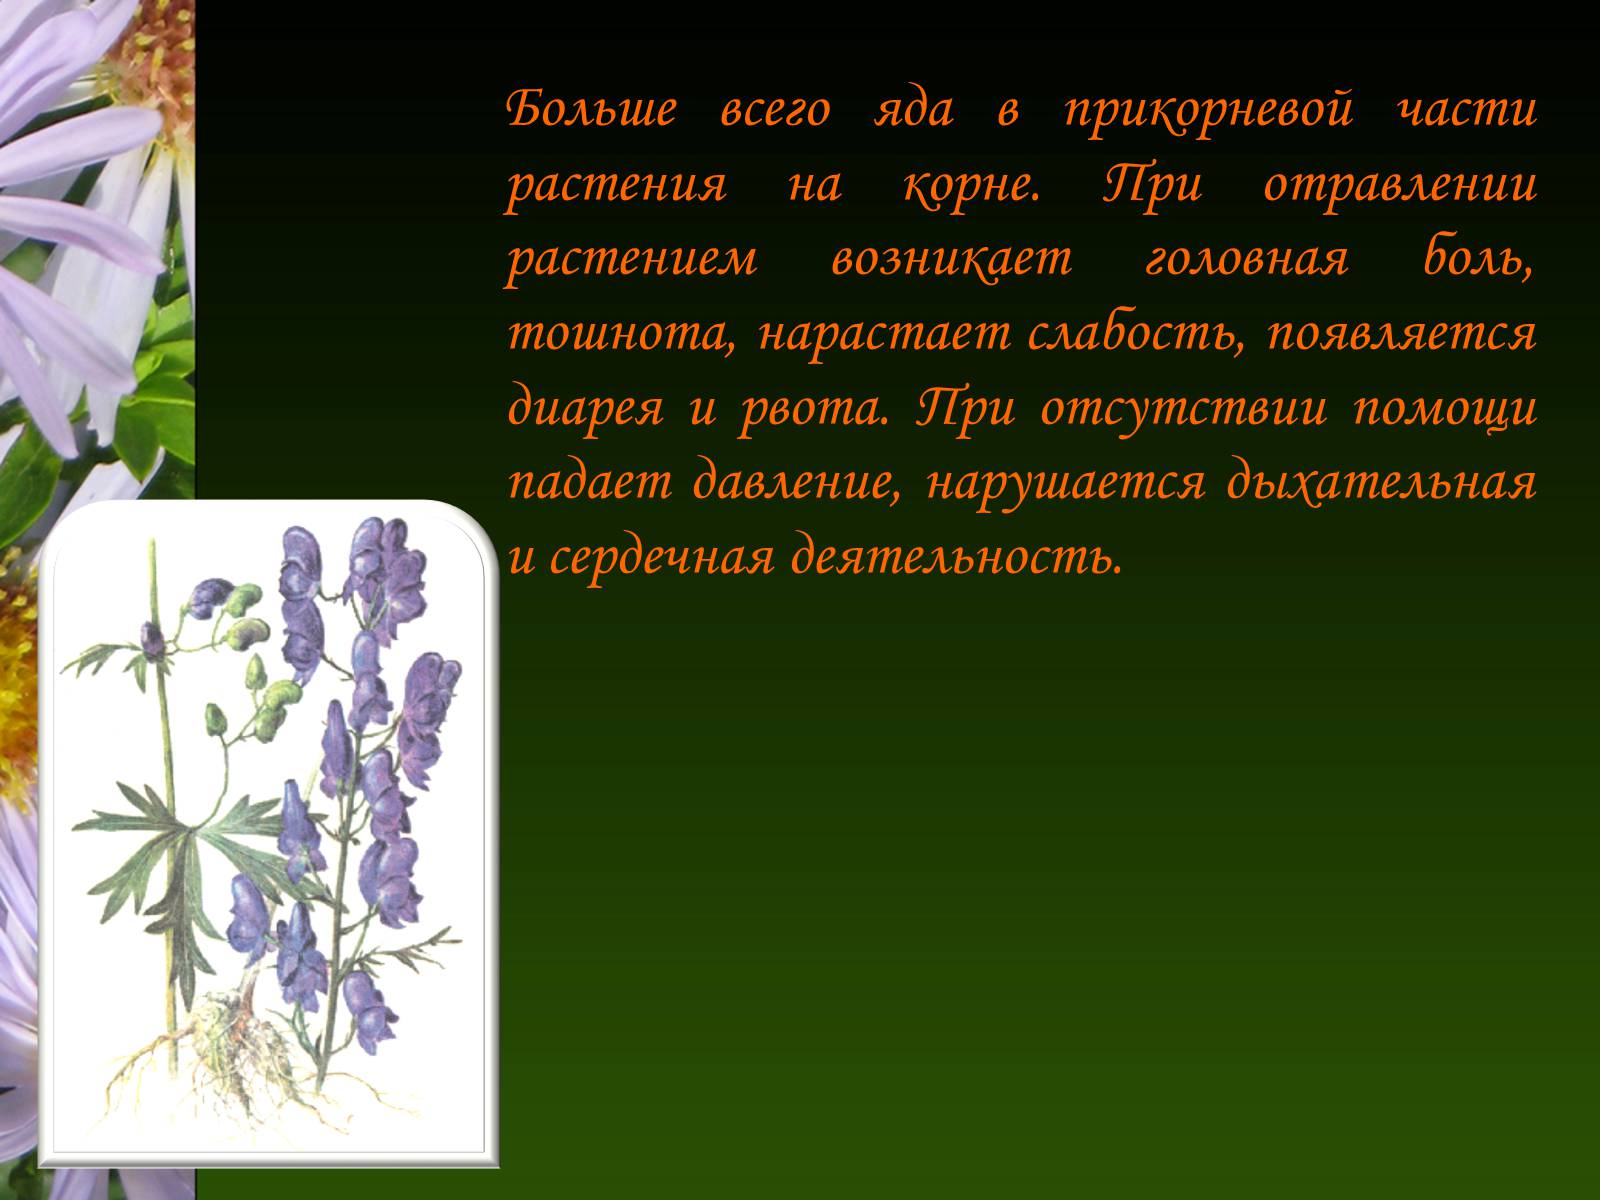 Презентація на тему «Ядовитые растения Украины» - Слайд #15